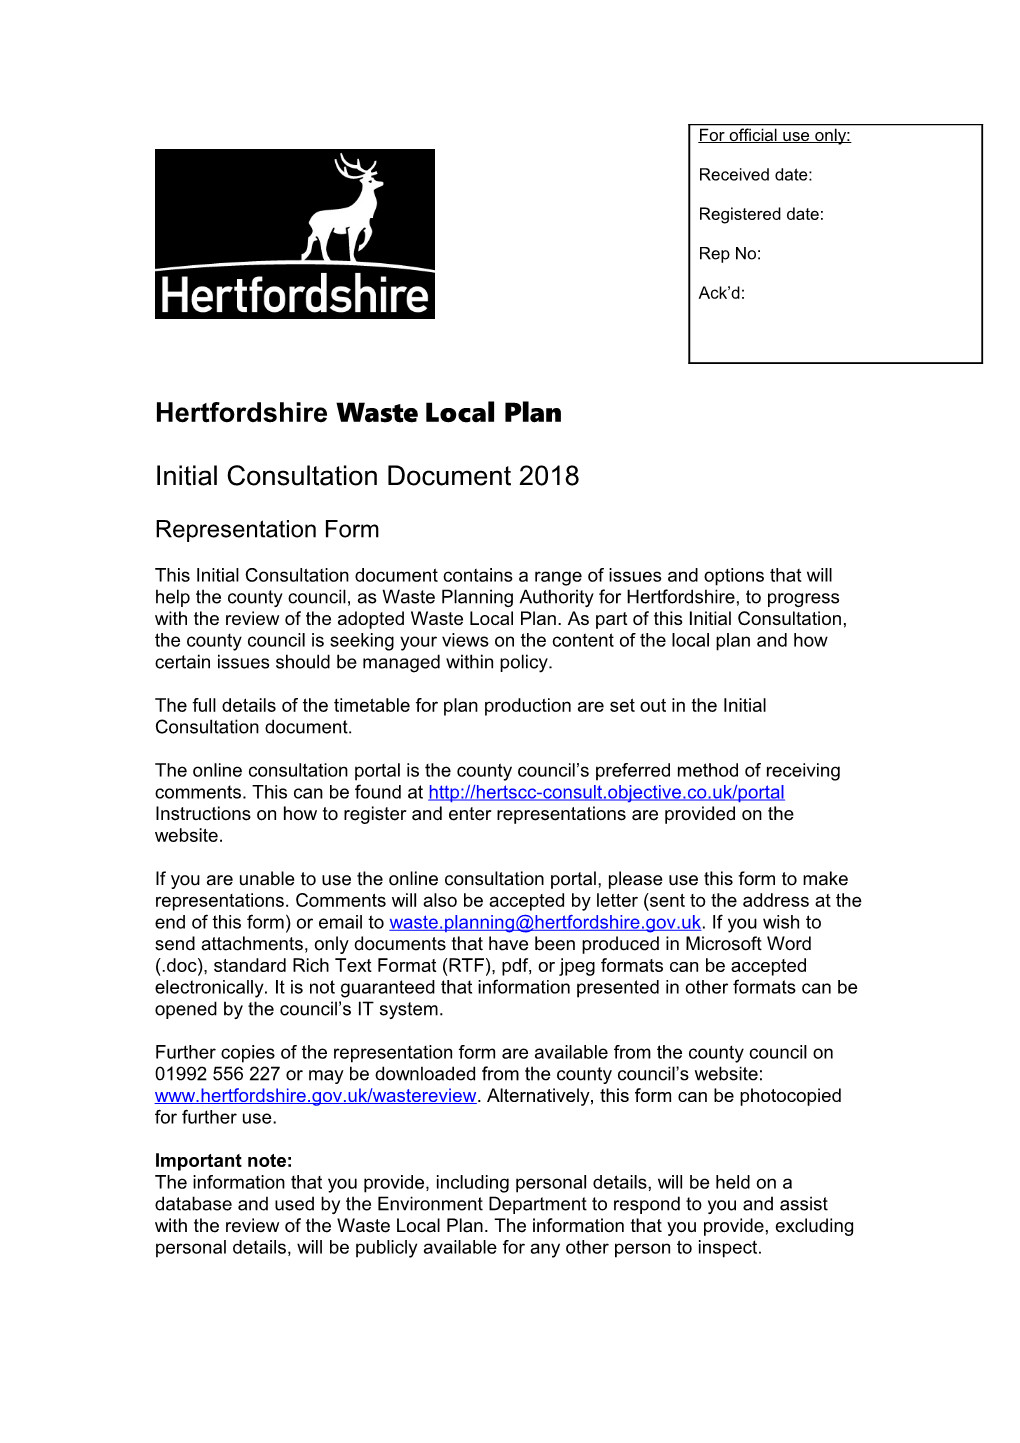 Hertfordshirewaste Local Plan